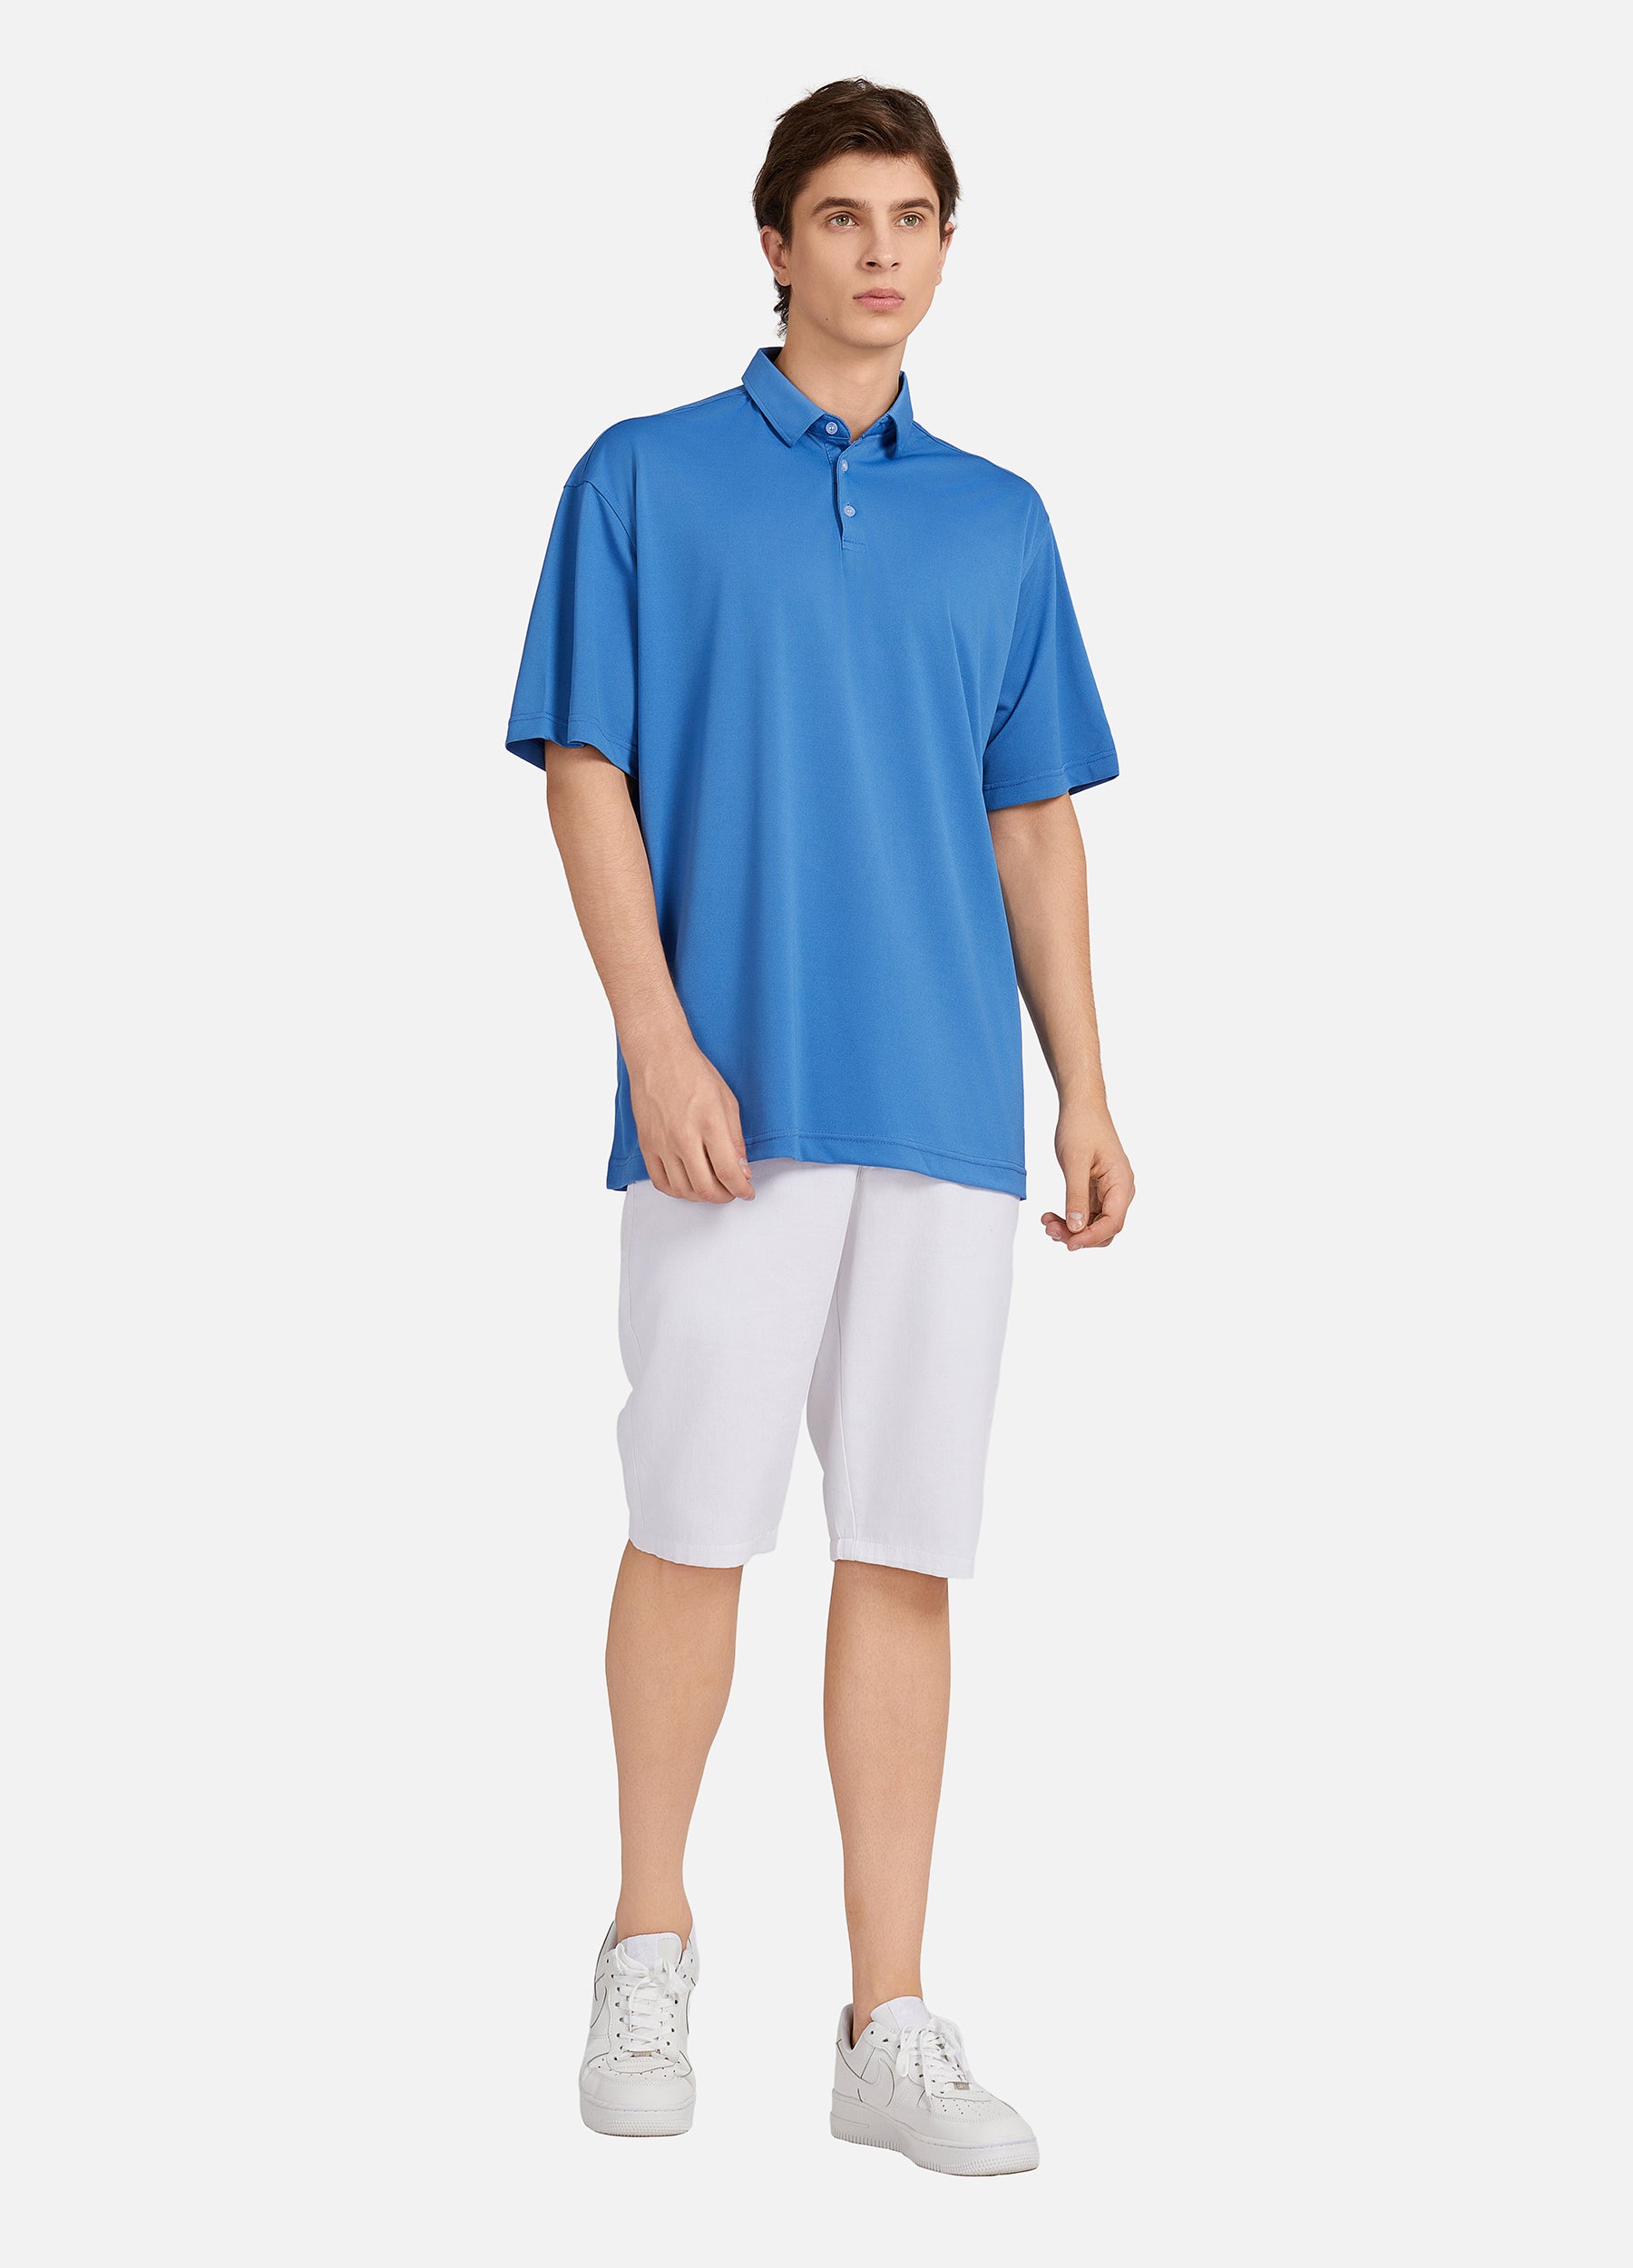 1PA1 Men's Short Sleeve Polo Shirts Moisture Wicking Quick Dry Golf Shirts